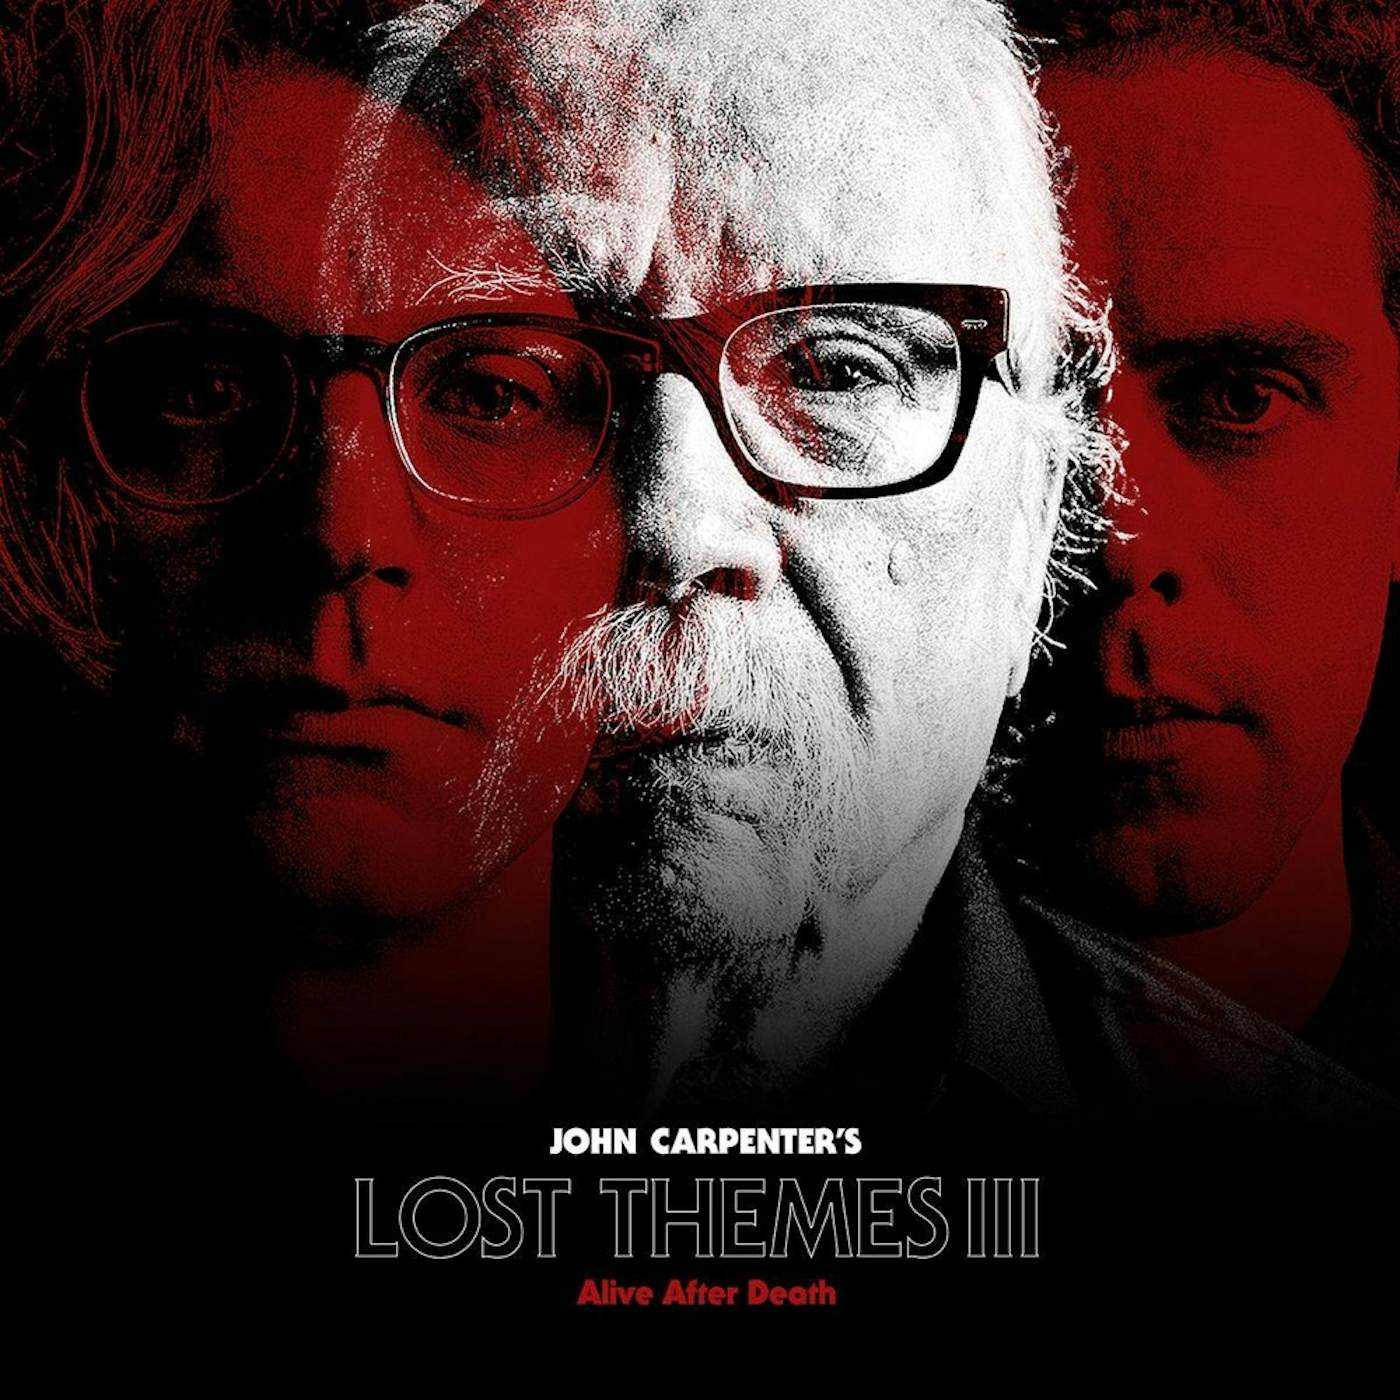 John Carpenter LOST THEME III: ALIVE AFTER DEATH Vinyl Record